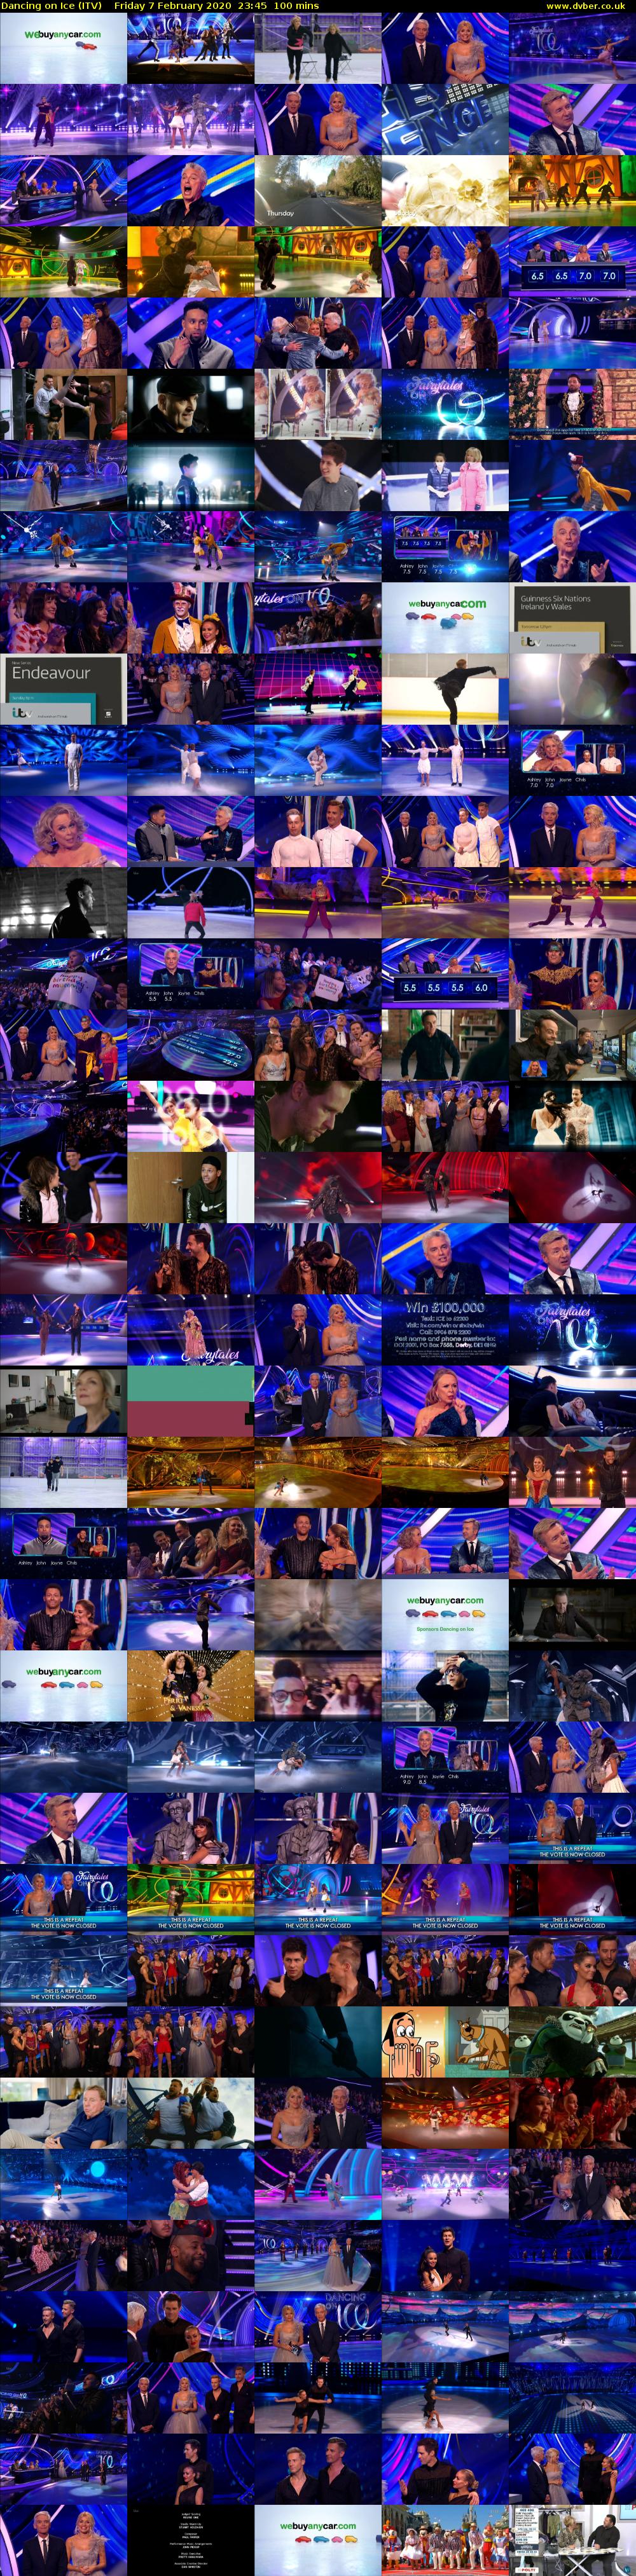 Dancing on Ice (ITV) Friday 7 February 2020 23:45 - 01:25